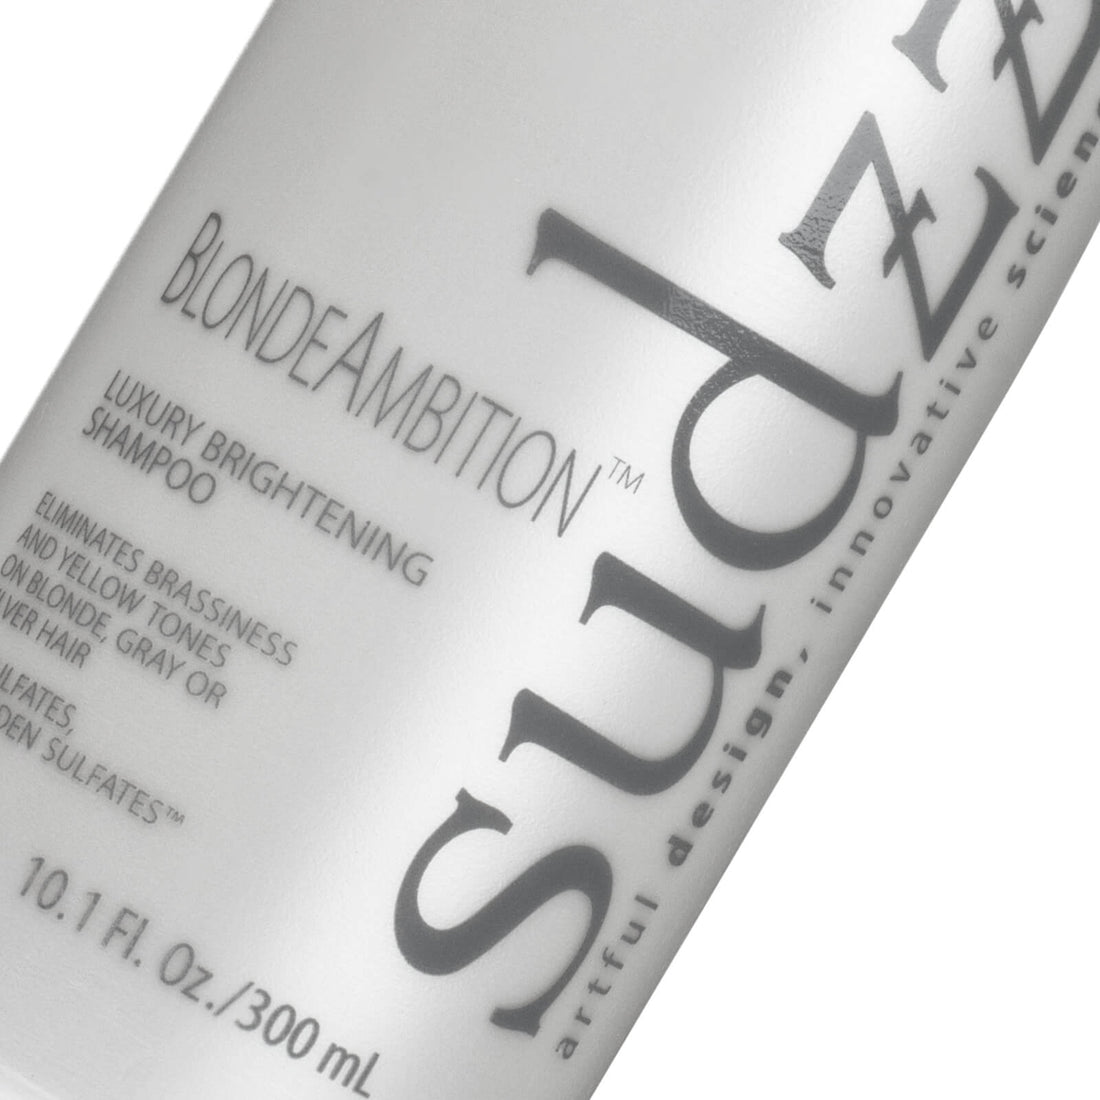 Sudzz BlondeAmbition™ Luxury Brightening Shampoo